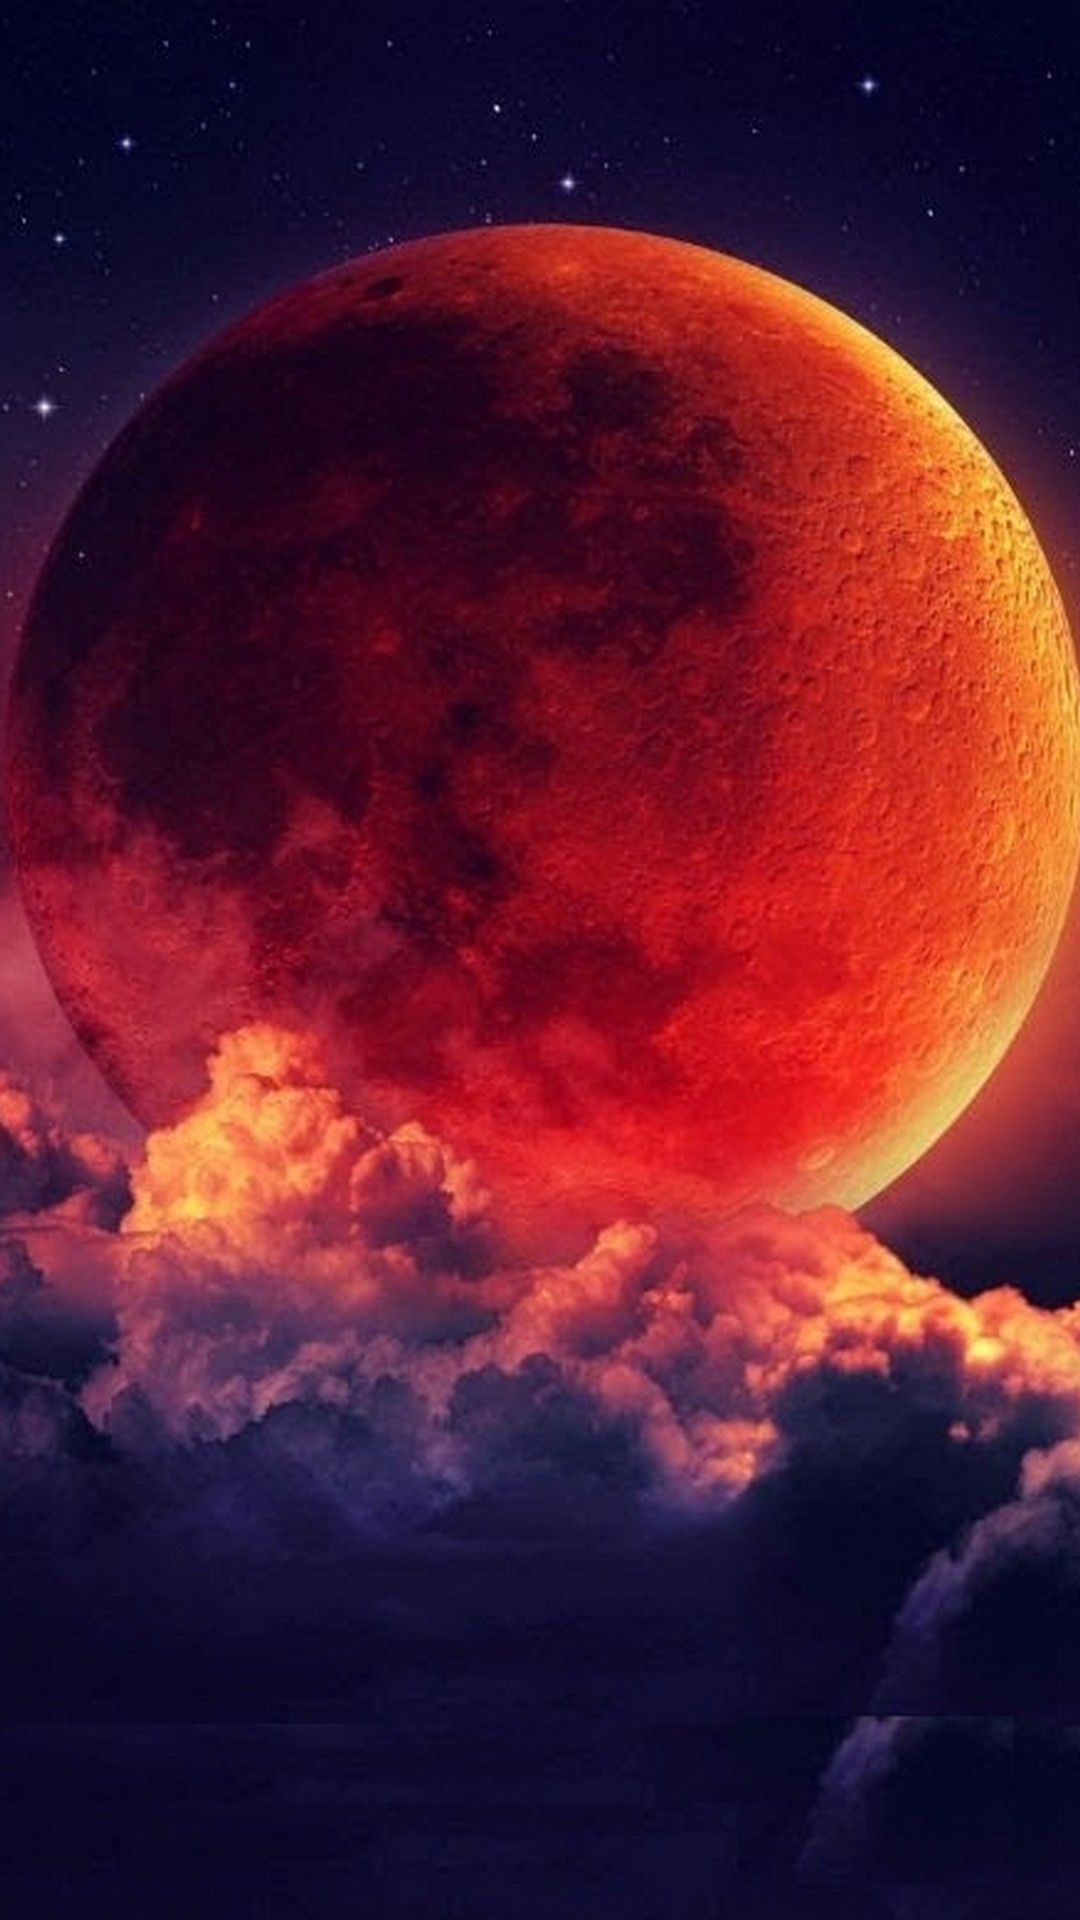 Blood Moon Night Live Wallpaper - free download